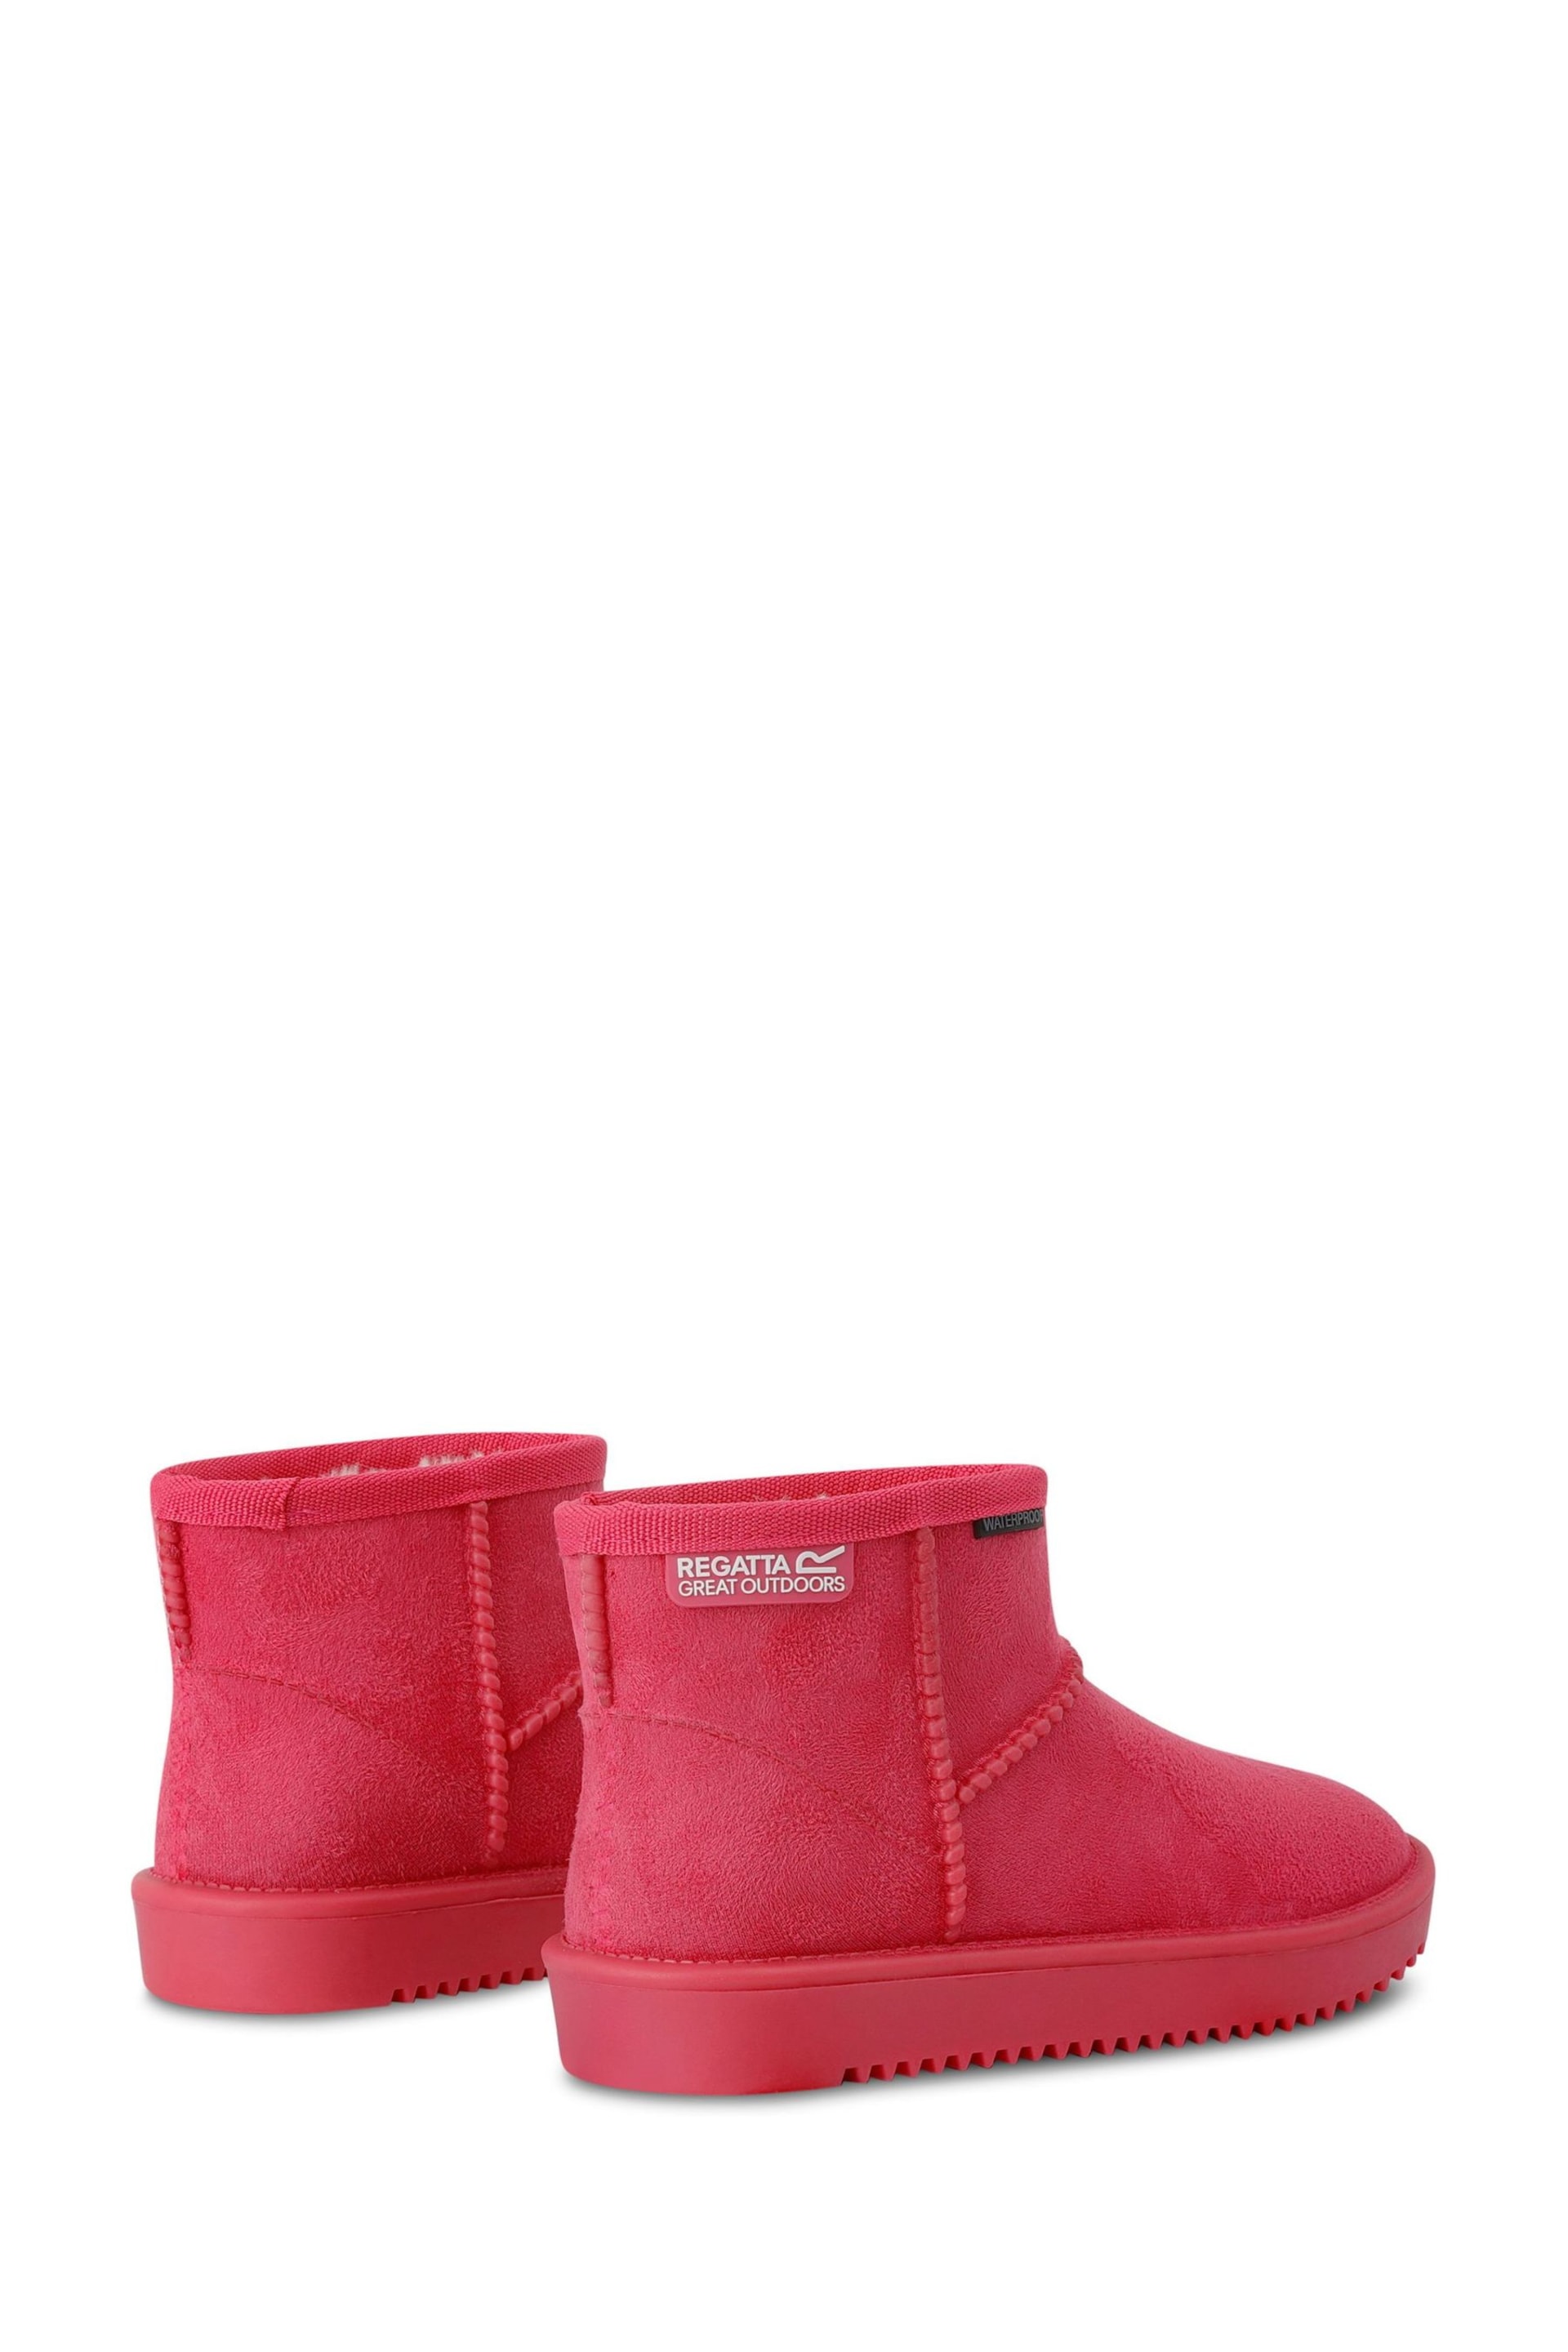 Regatta Pink Girls Risley Waterproof Faux Fur Lined Boots - Image 2 of 6